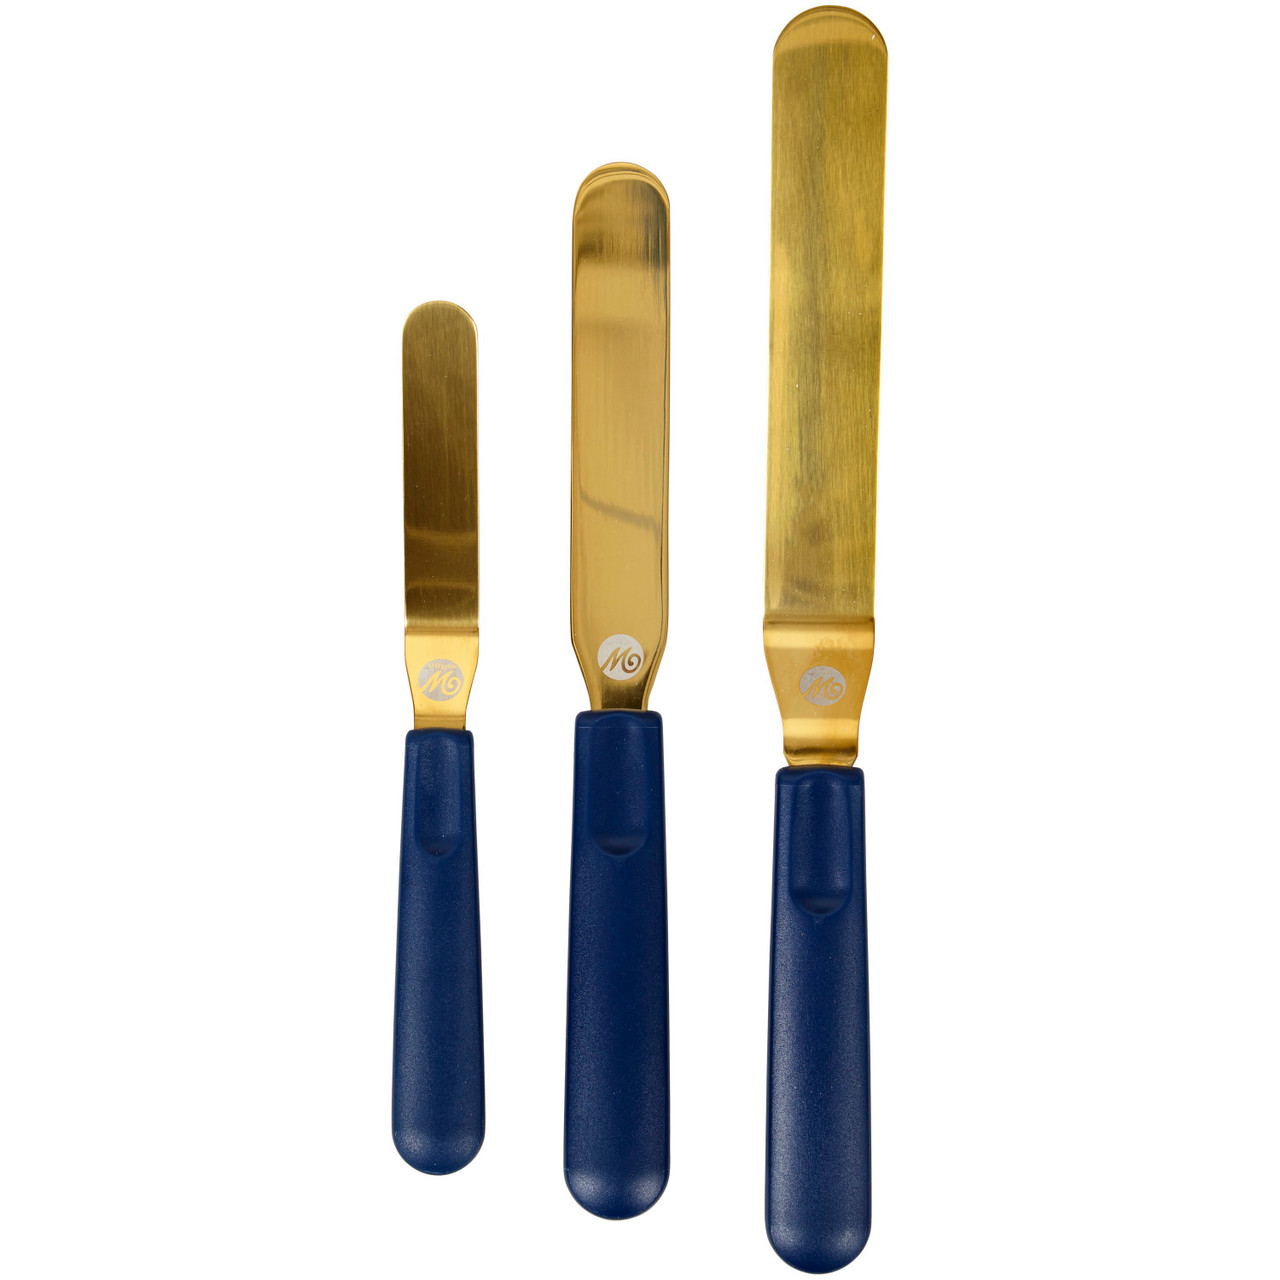 Wilton 3pc Icing Spatula Set Navy Blue/Gold